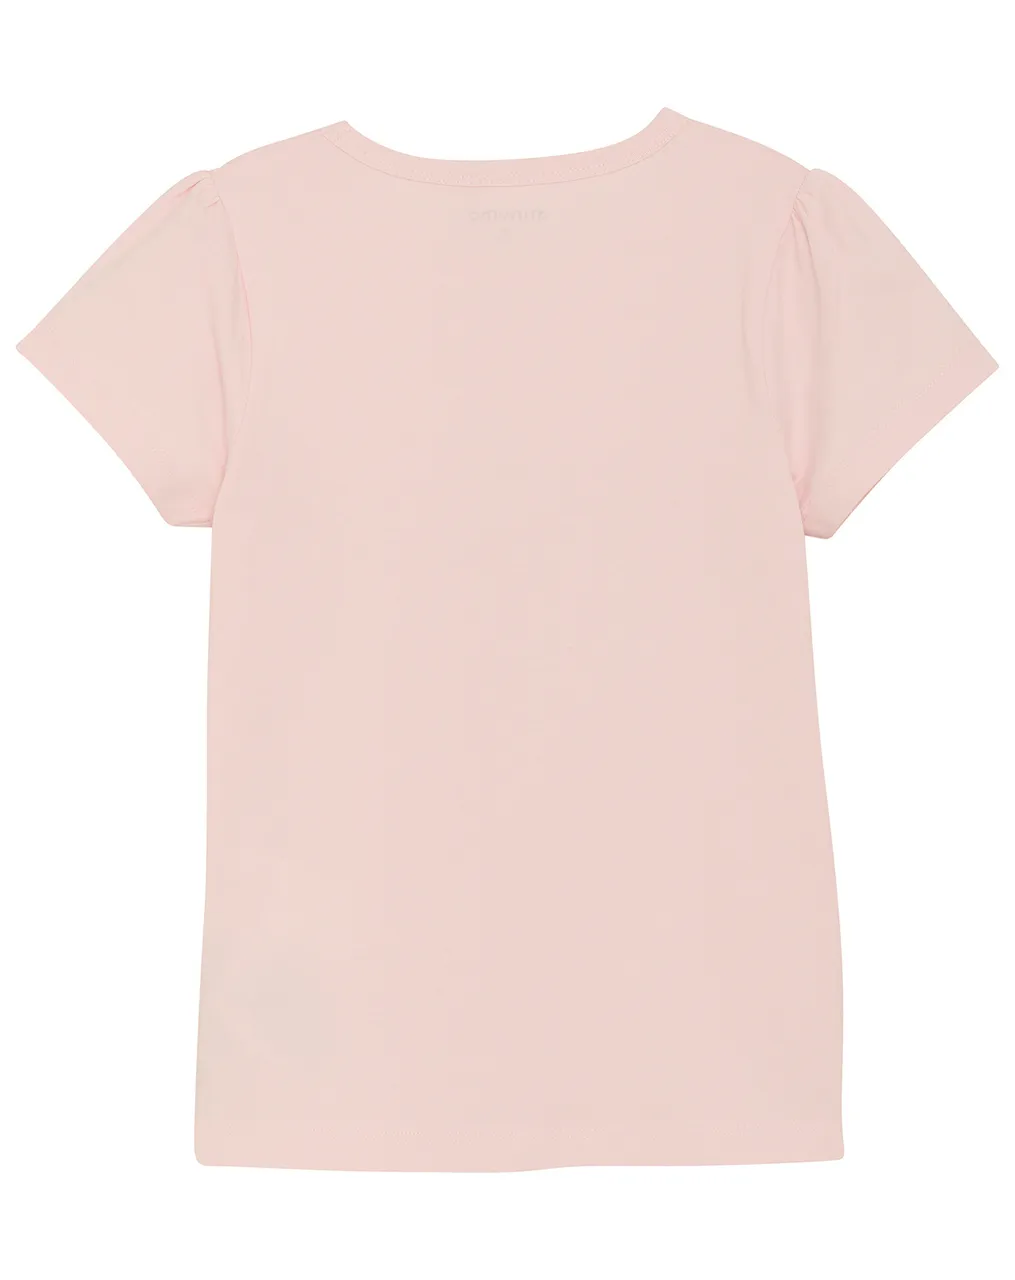 T-Shirt PAW PATROL GIRL POWER in pink dogwood